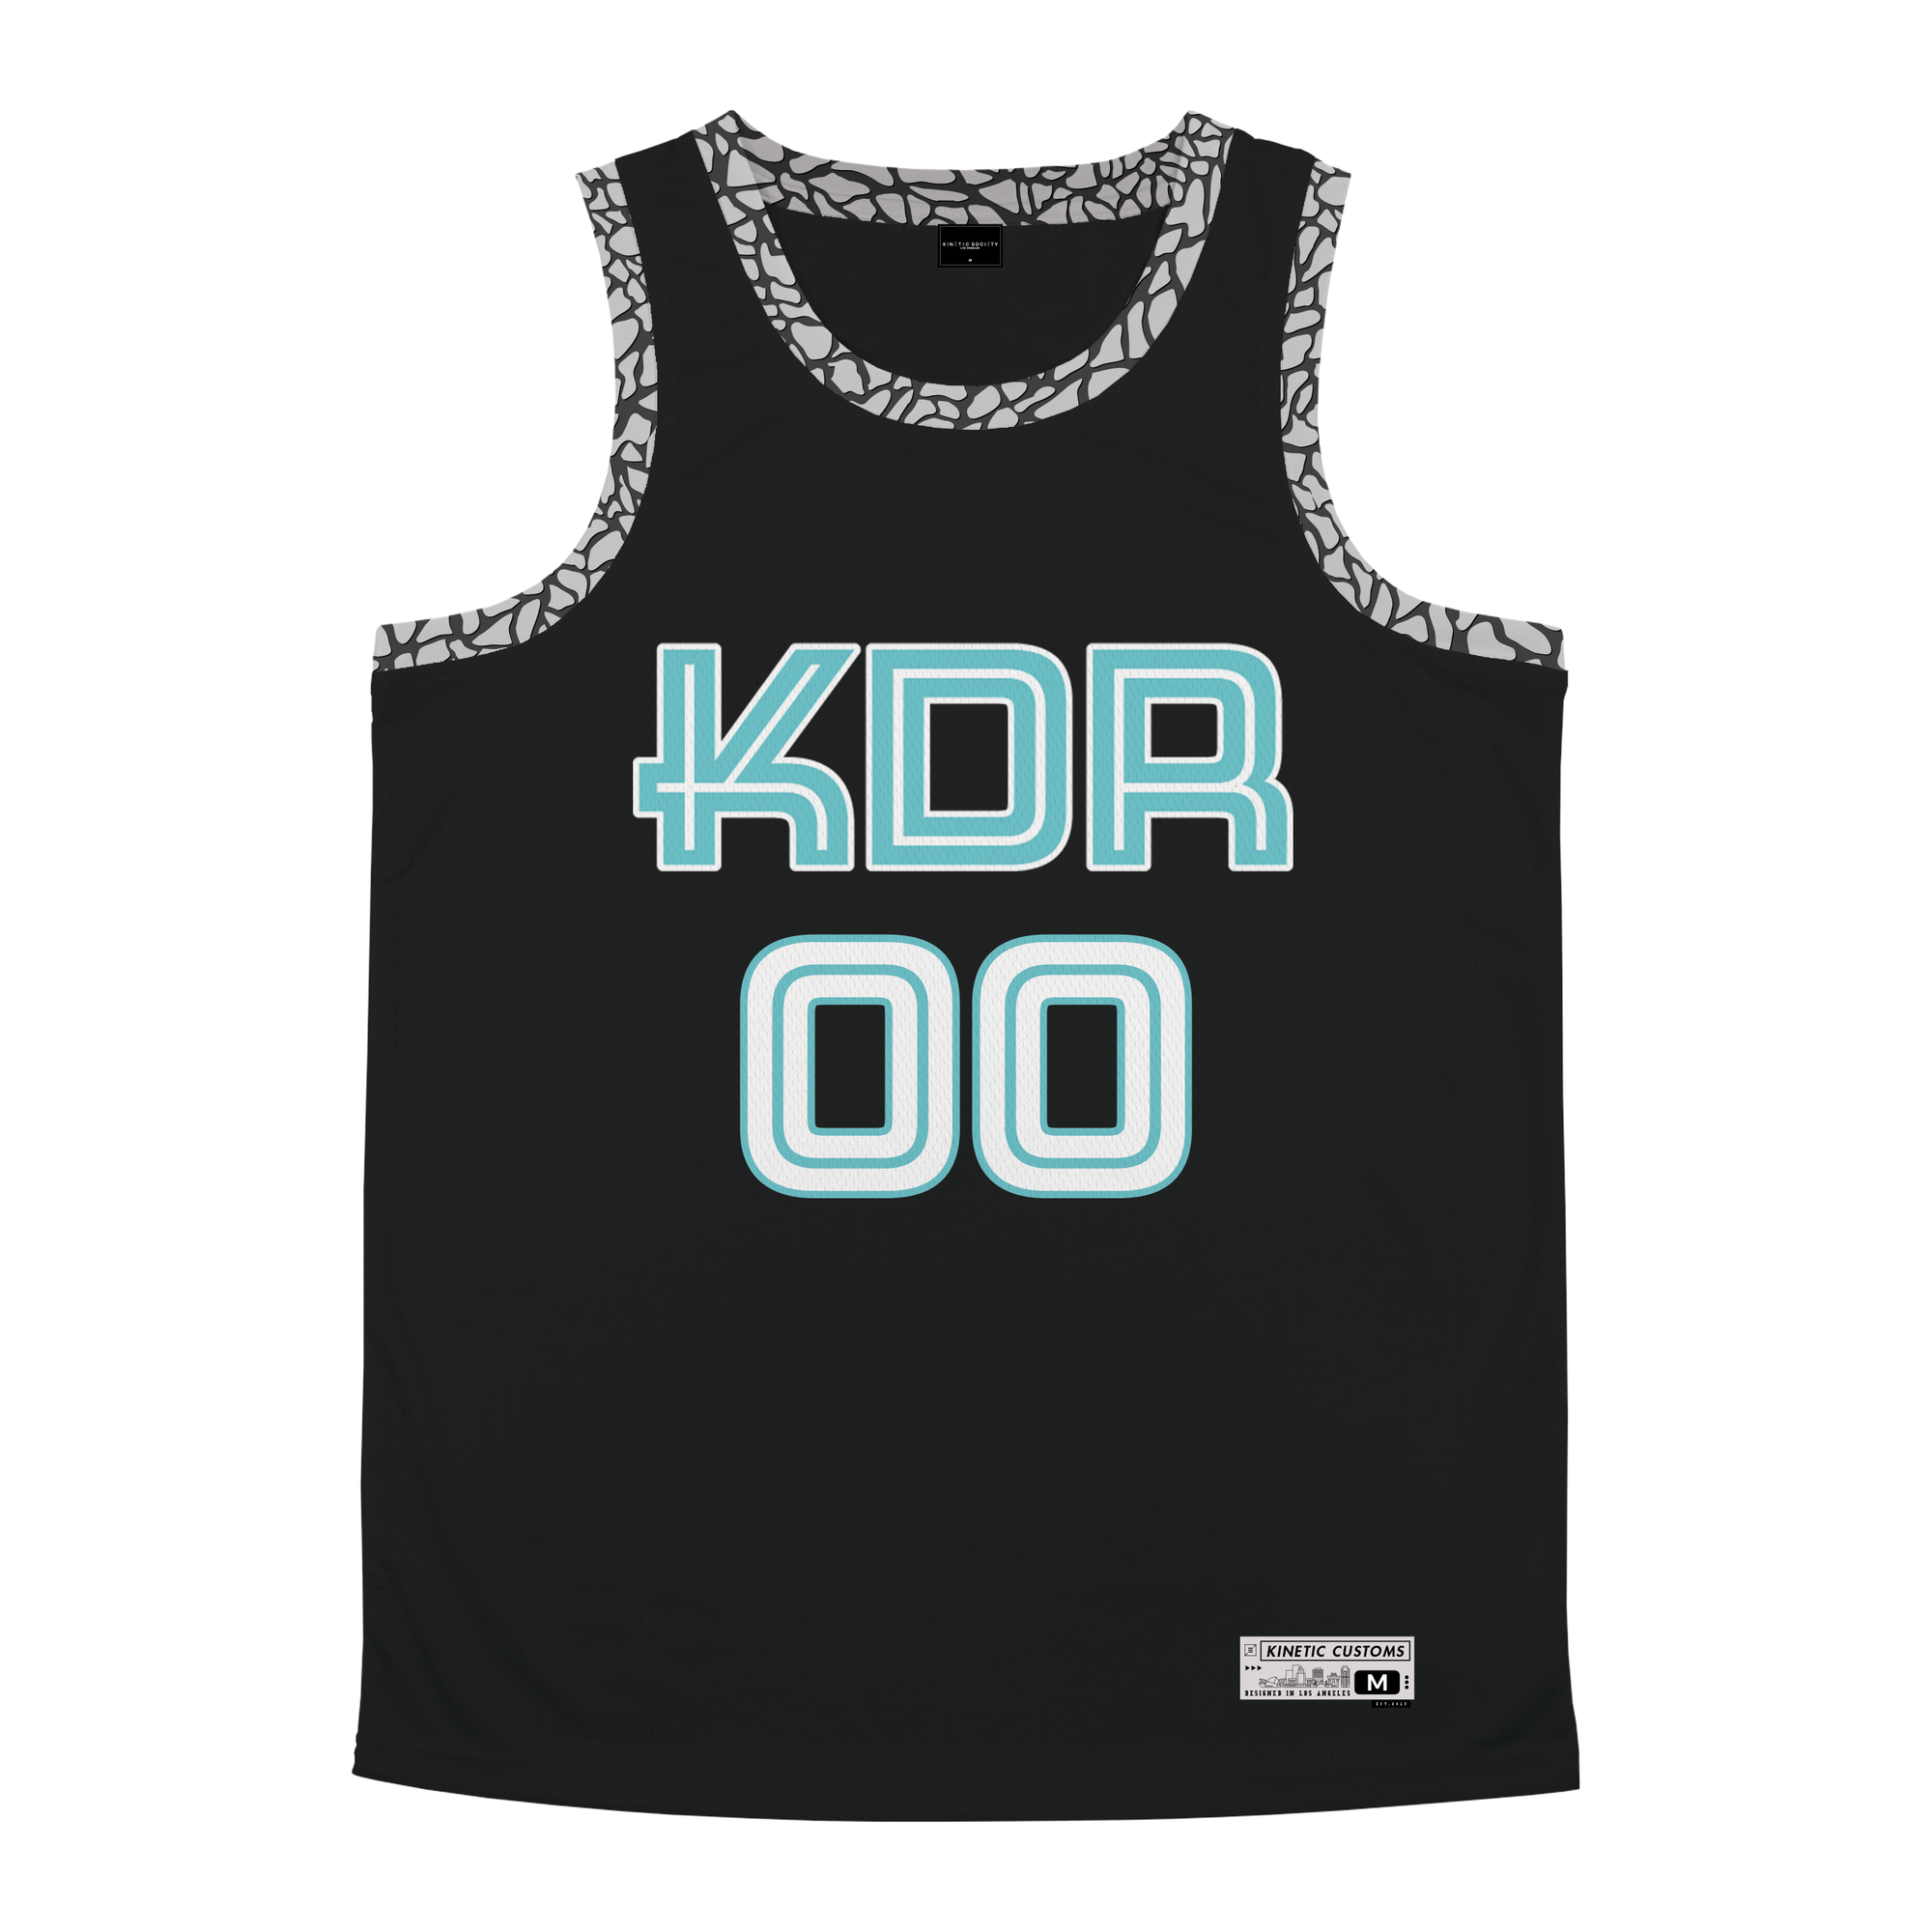 Kappa Delta Rho - Cement Basketball Jersey